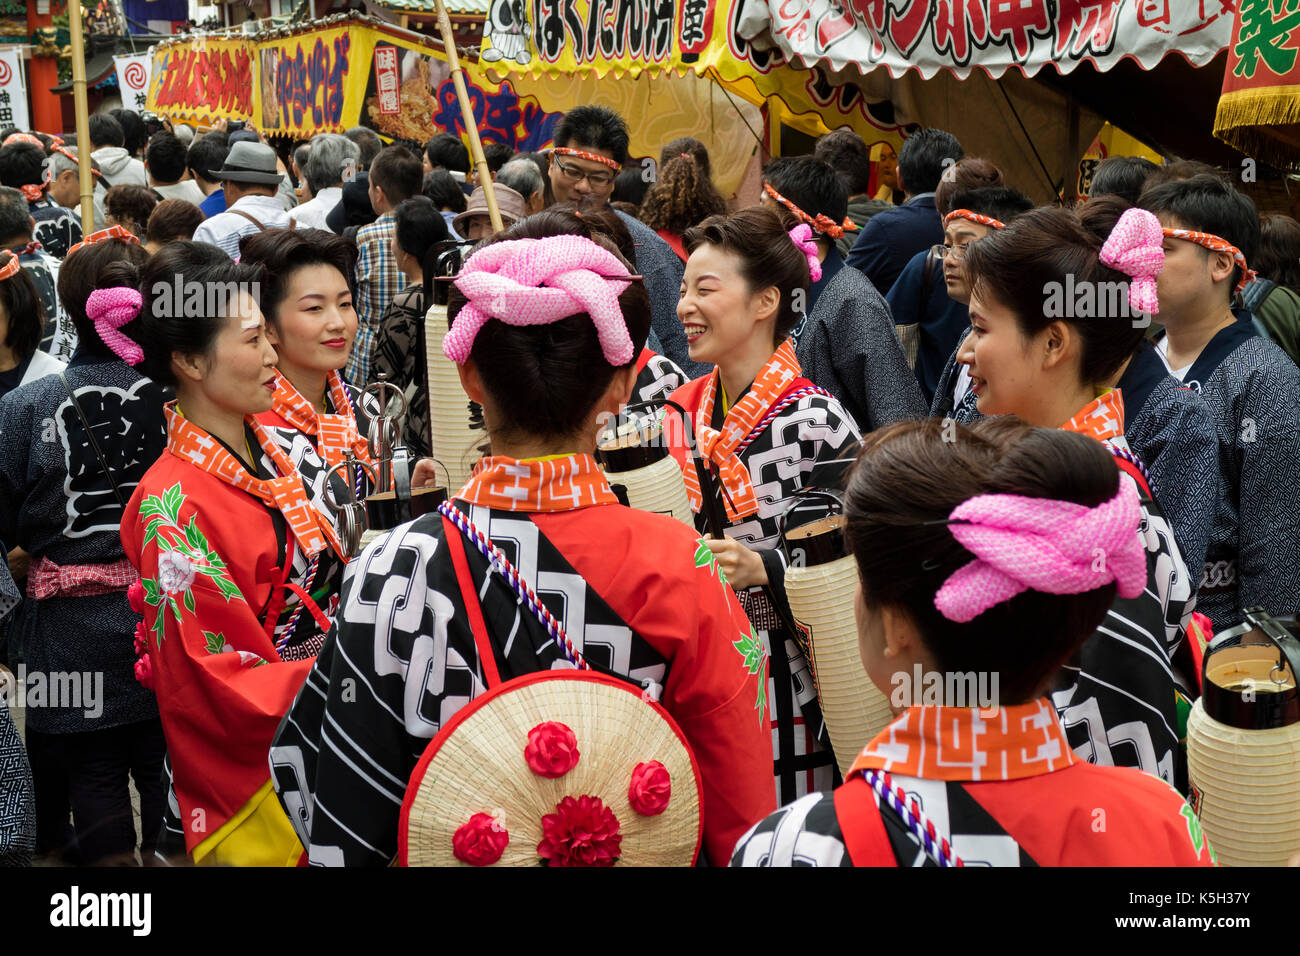 Tokyo, Japan - May 14, 2017: Female participants dressed in traditional kimono's at the Kanda Matsuri Festival Stock Photo